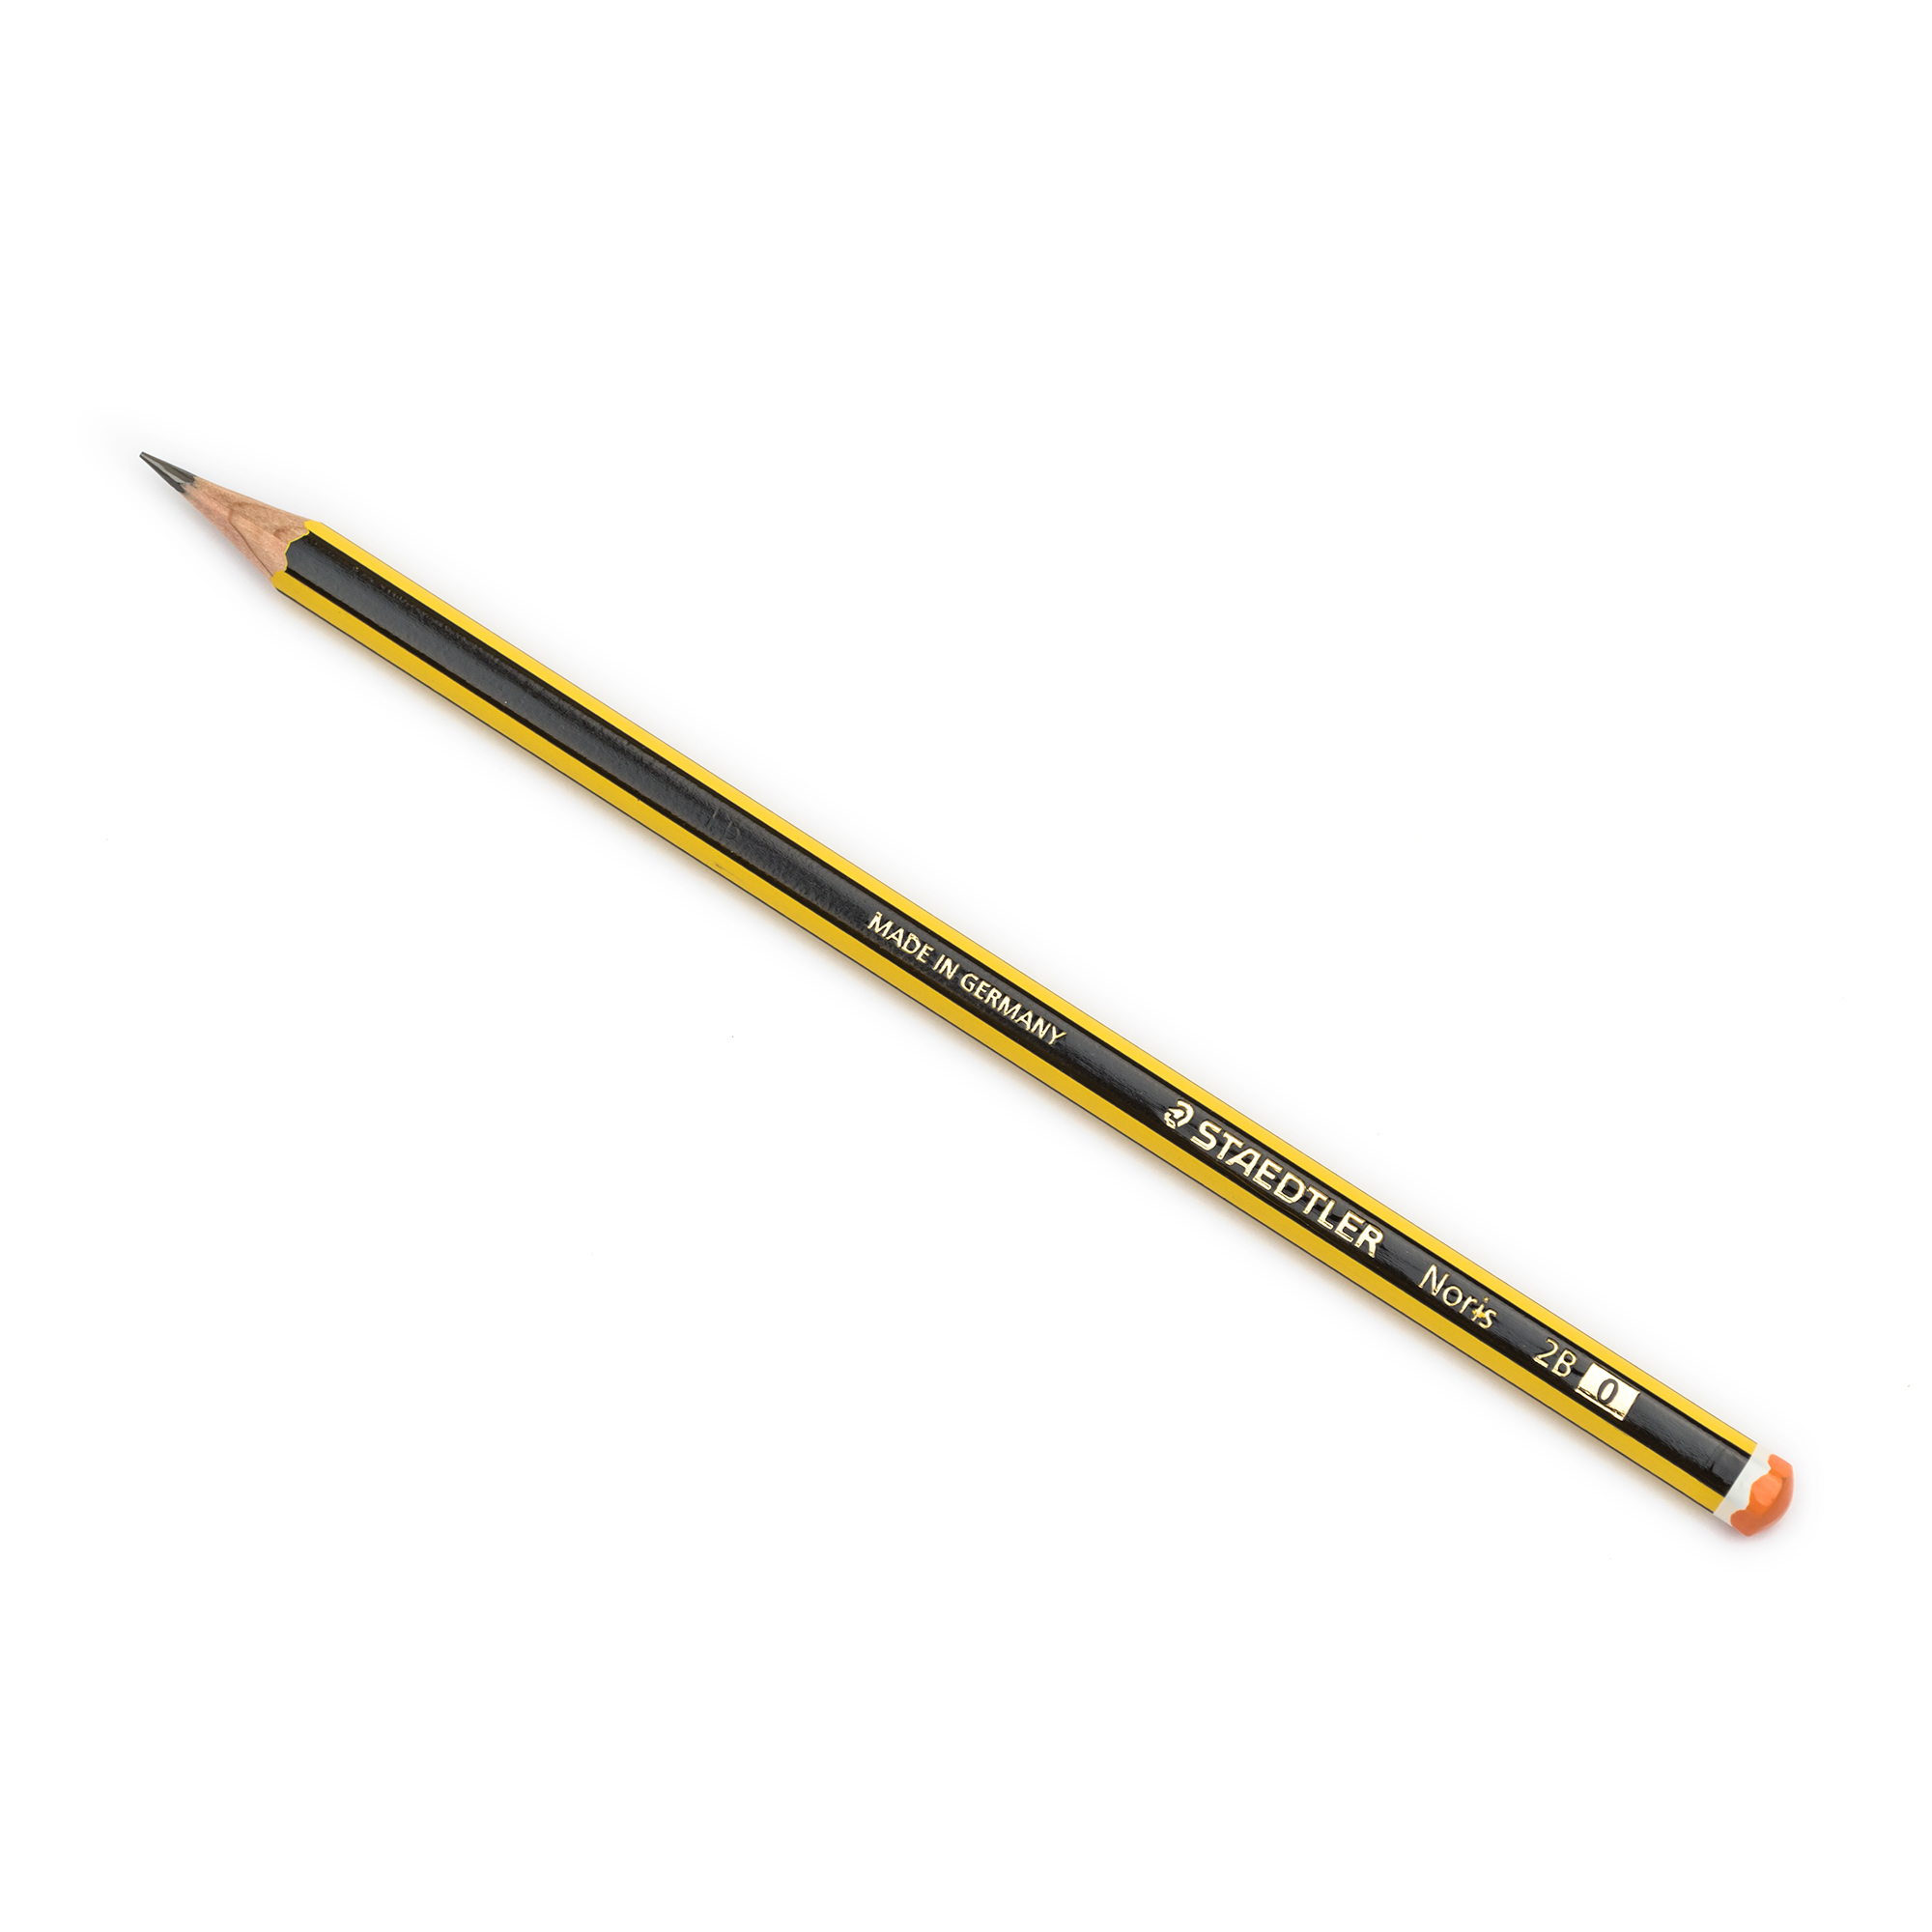 2B or not 2B Pencils